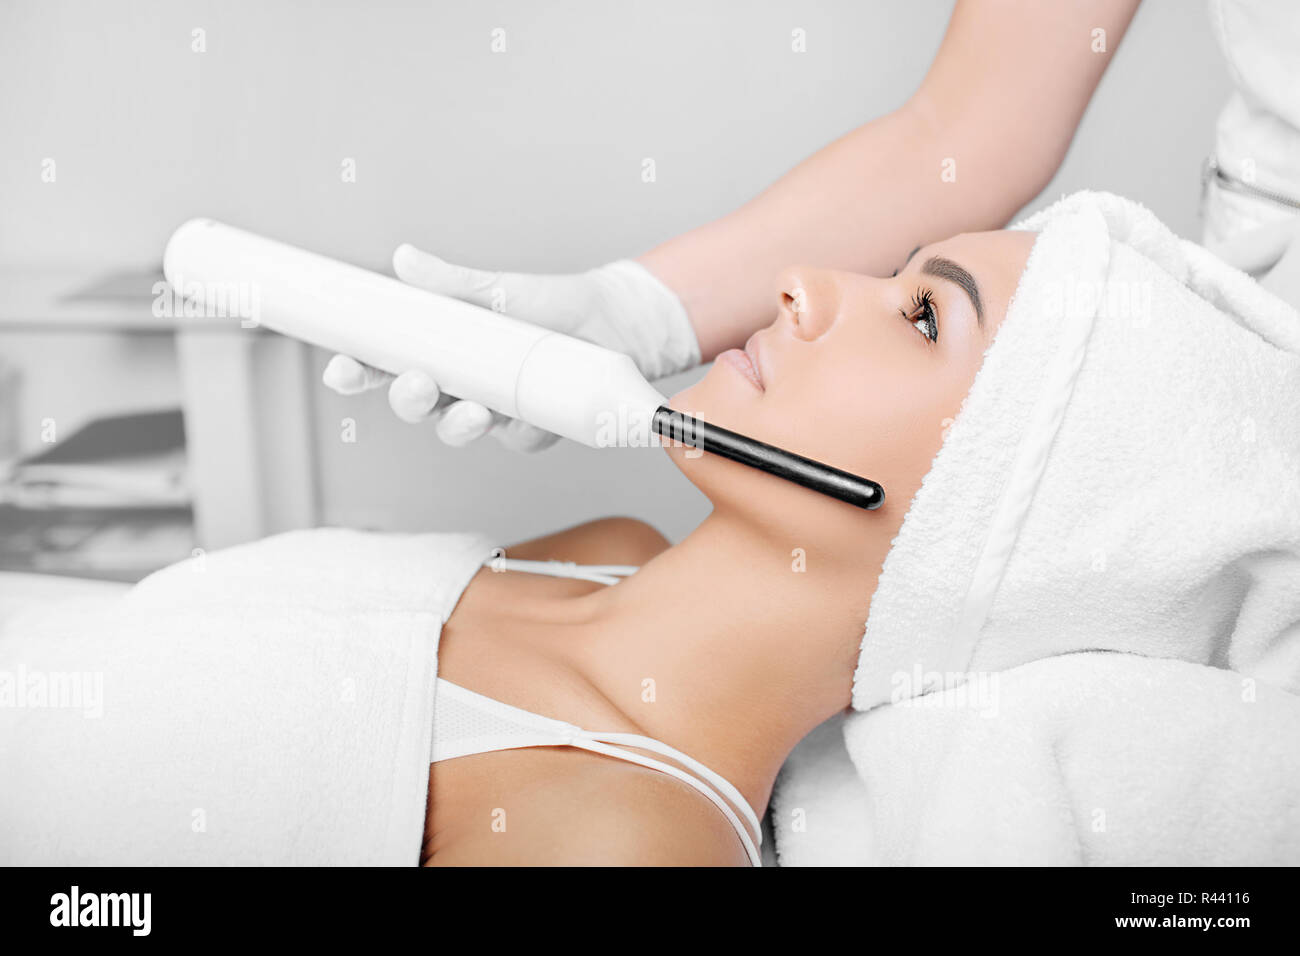 woman getting electric darsonval facial massage procedure at beauty salon. Stock Photo